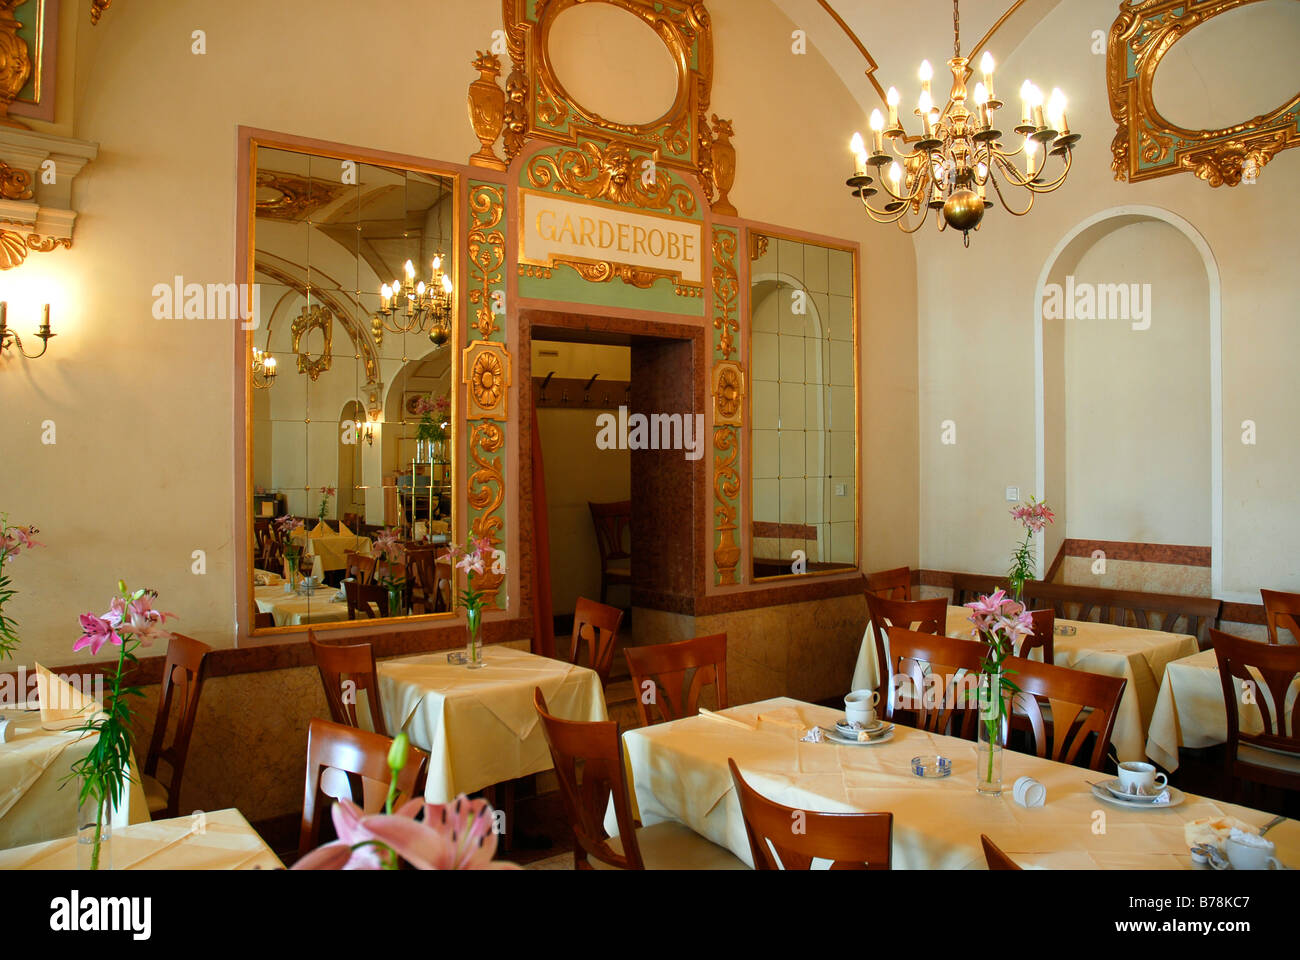 Keller Restaurant café bistro Orlando, interior decoration, gold and mirrors, Am Platzl Square, historic city centre, Munich, U Stock Photo